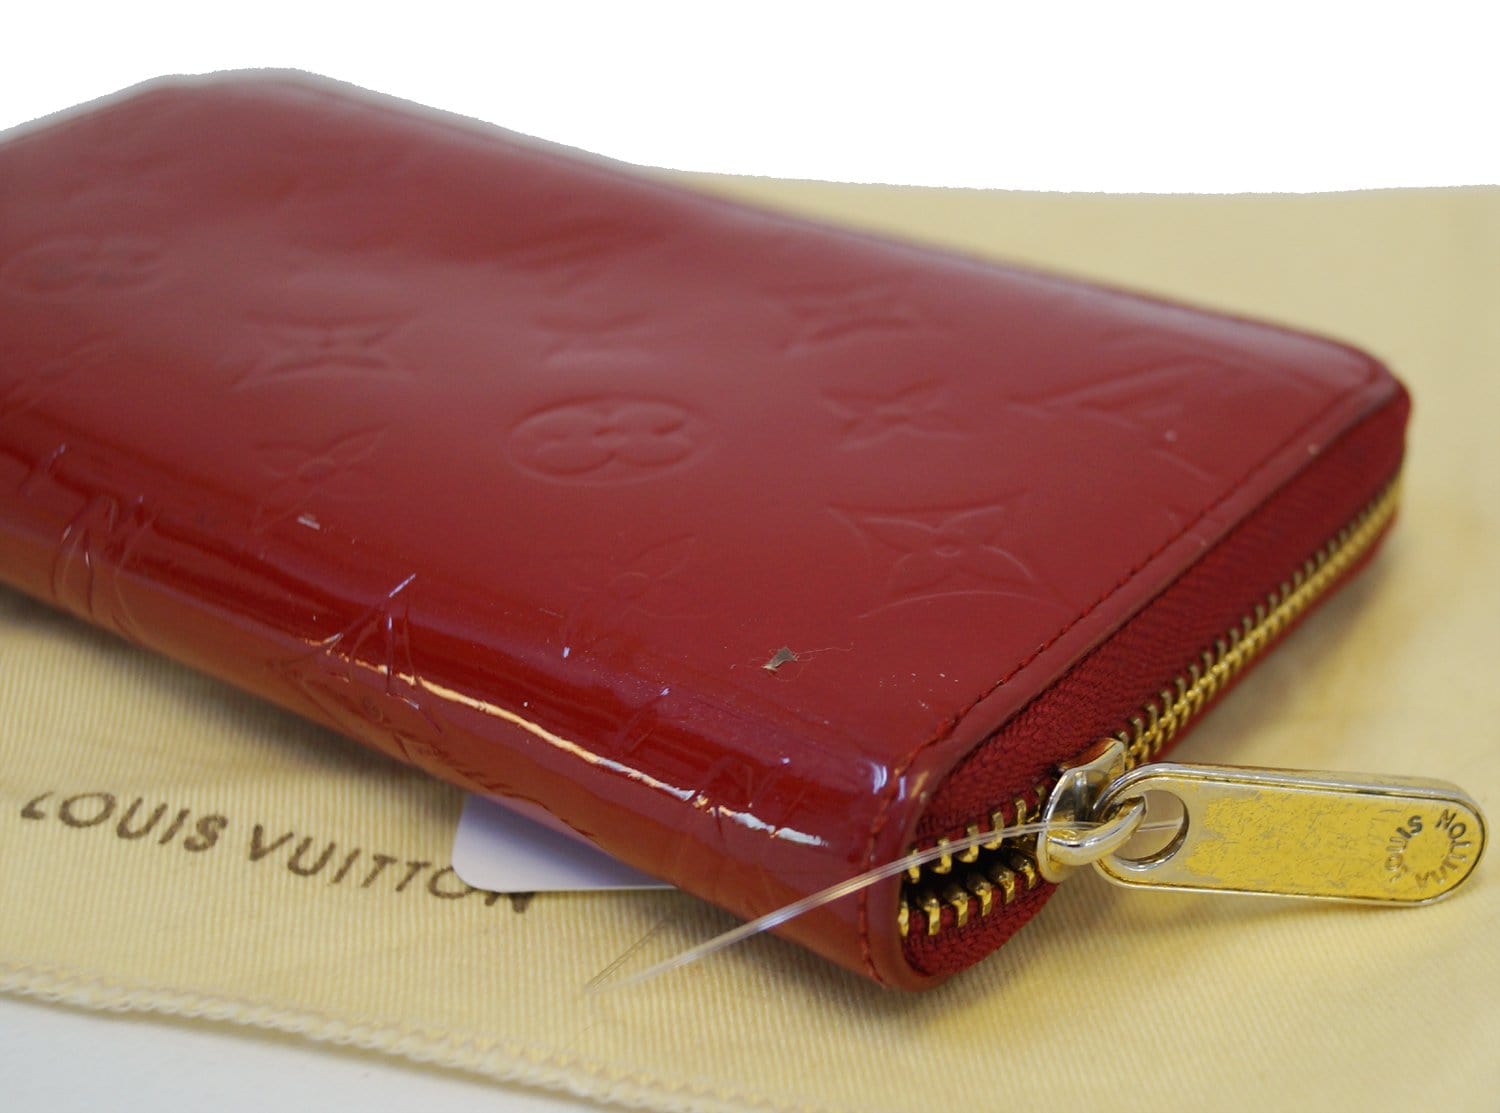 Louis Vuitton Vernis Zippy Compact Wallet